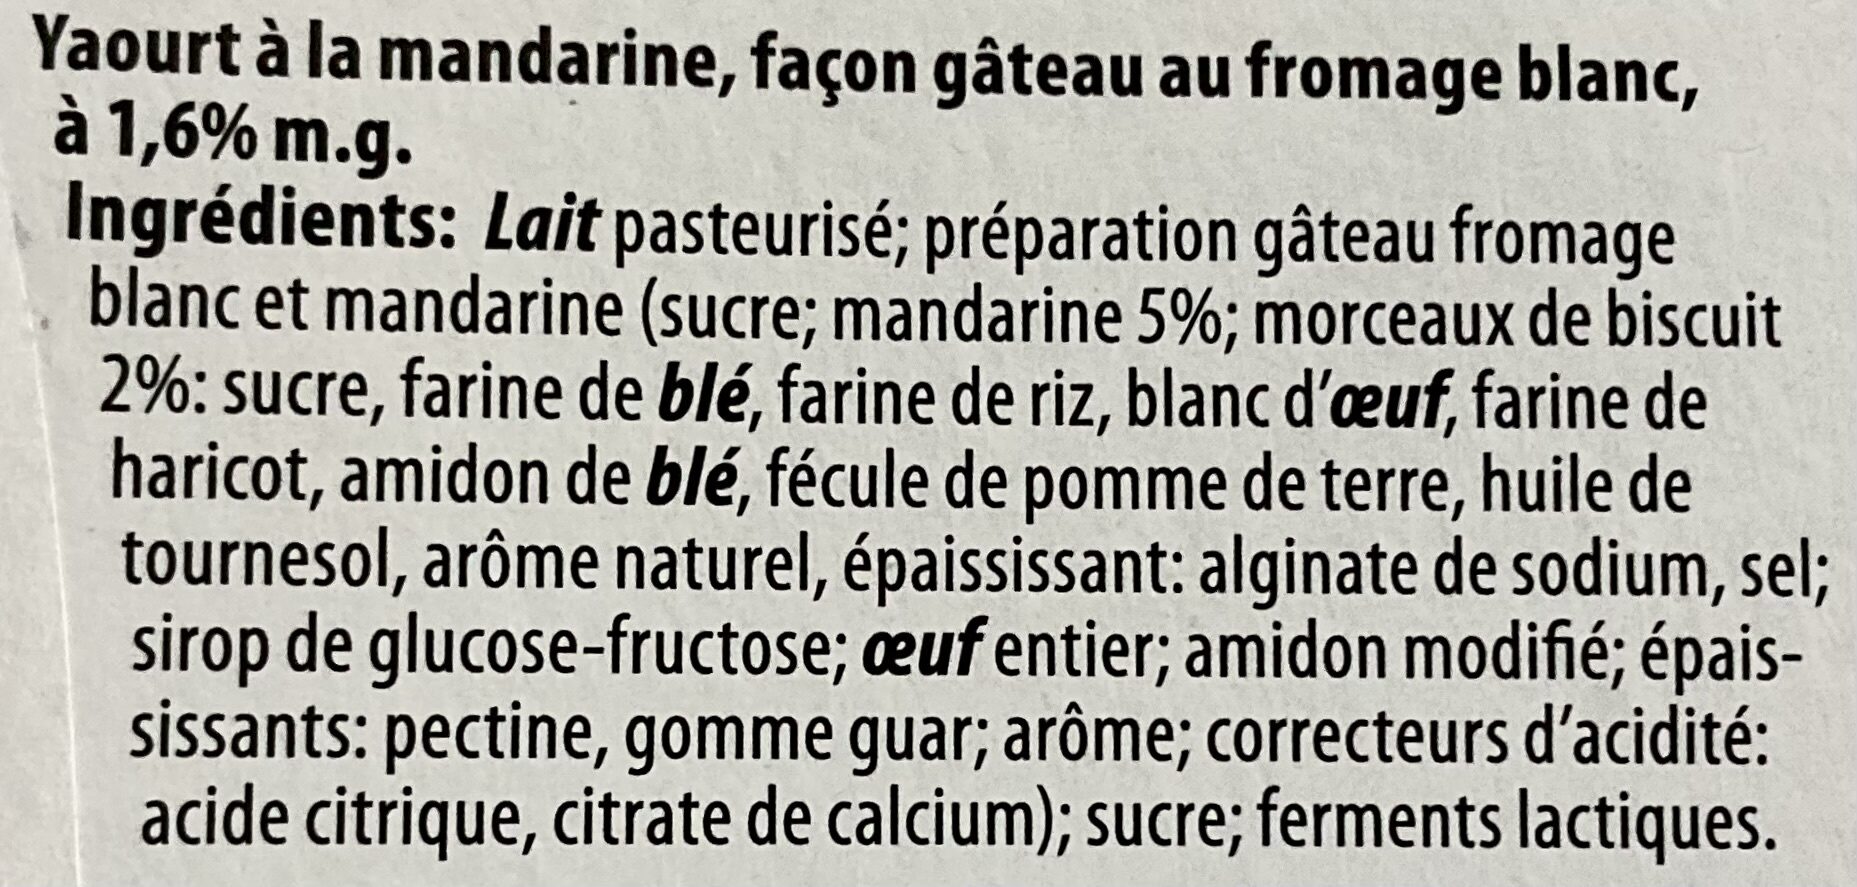 Yaourt du Luxembourg - Fromage blanc avec mandarine - Ingrédients